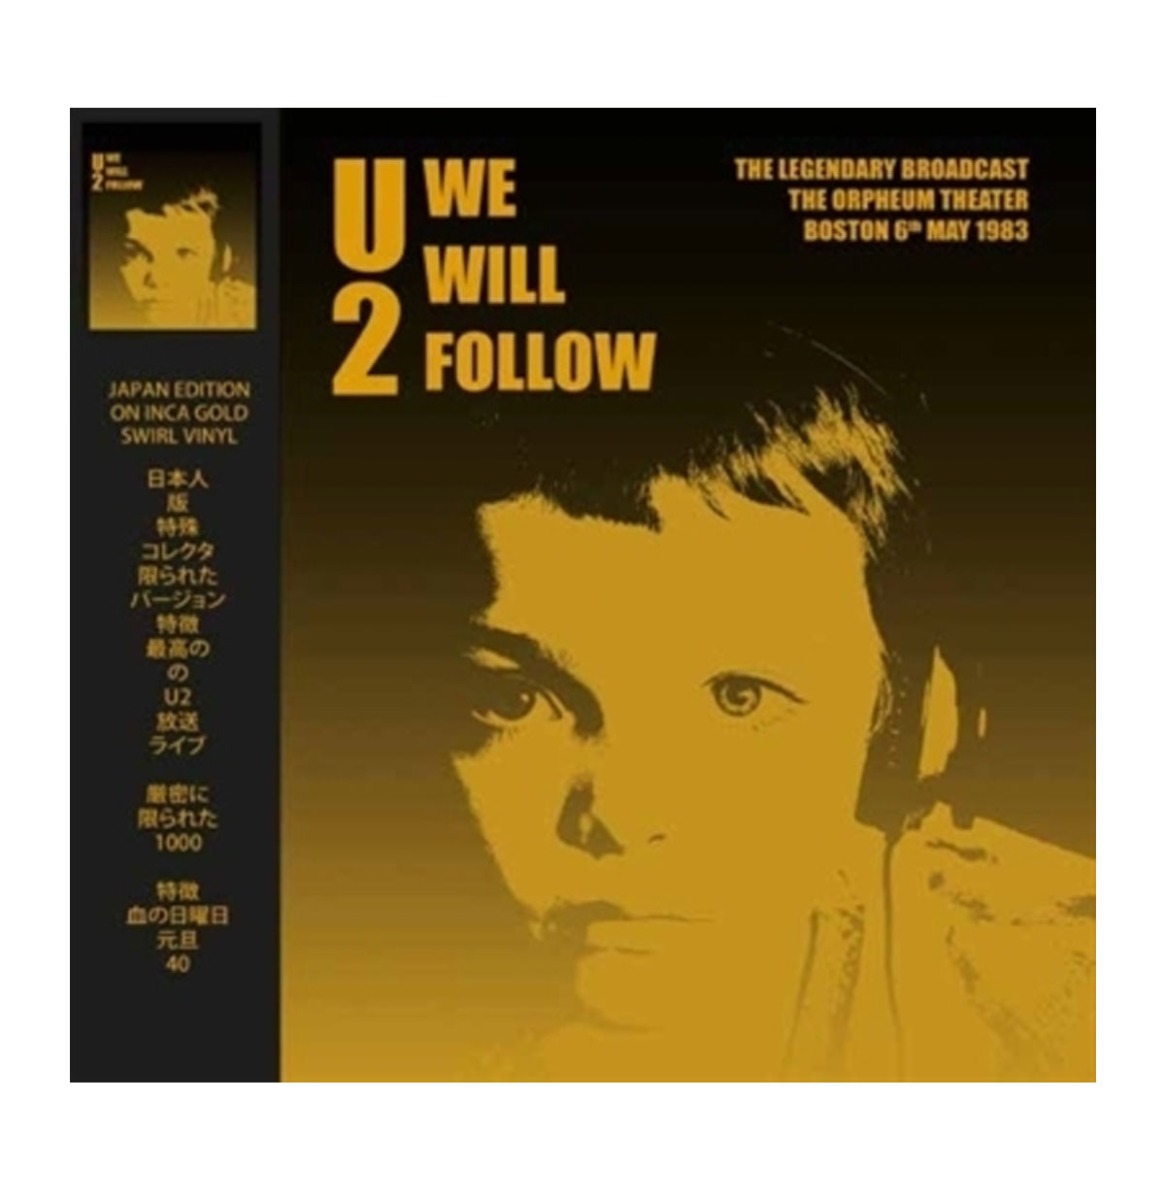 U2 - We Will Follow - The Legendary Broadcast LP